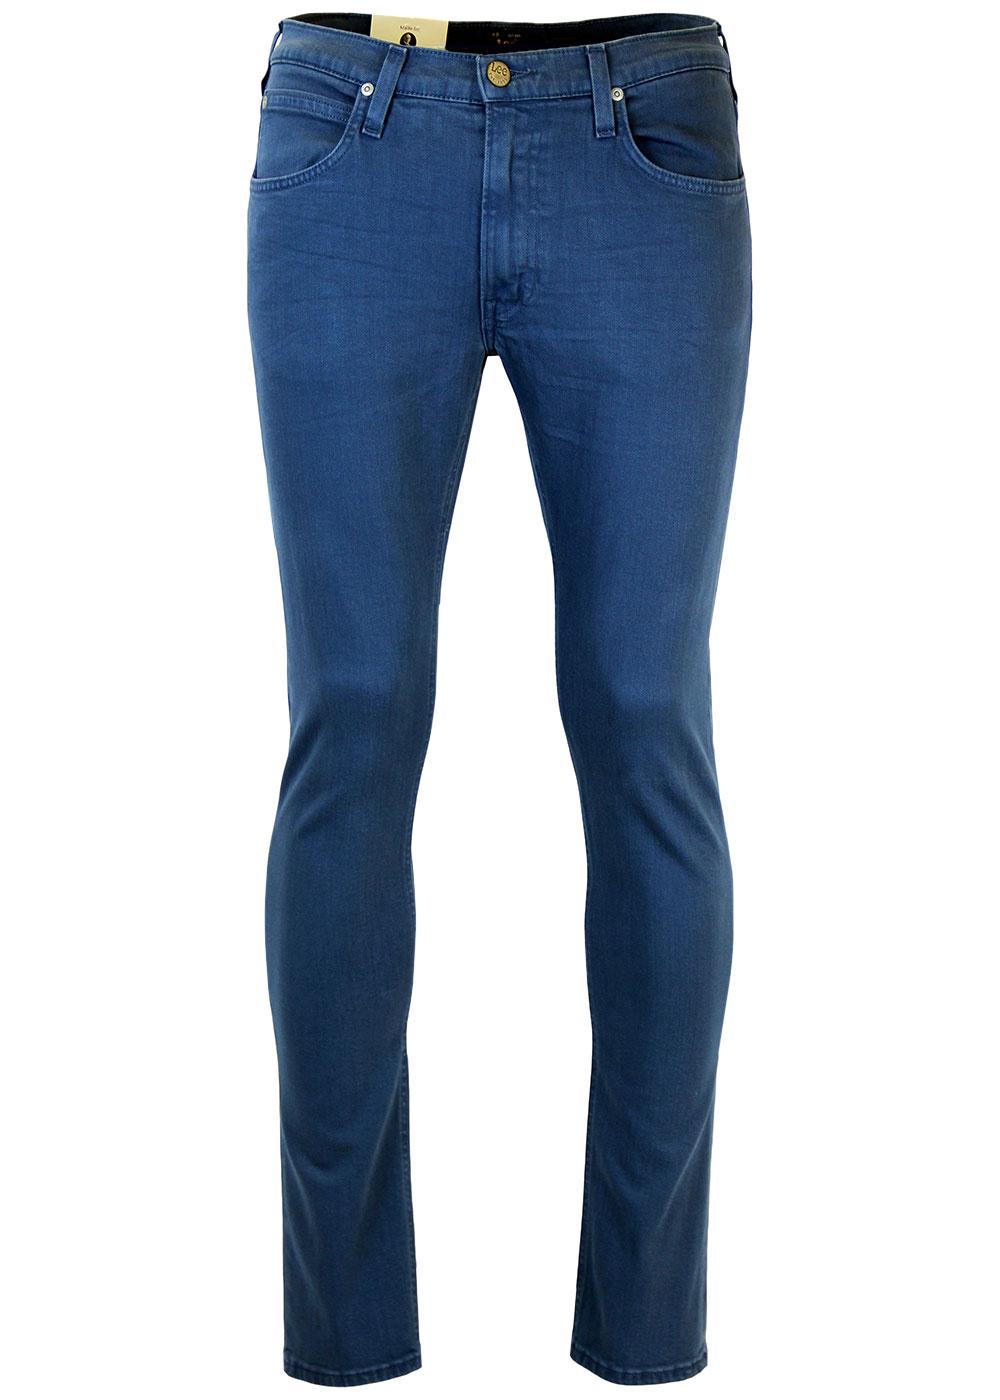 Luke LEE Retro Mod Slim Tapered Blue Denim Jeans 